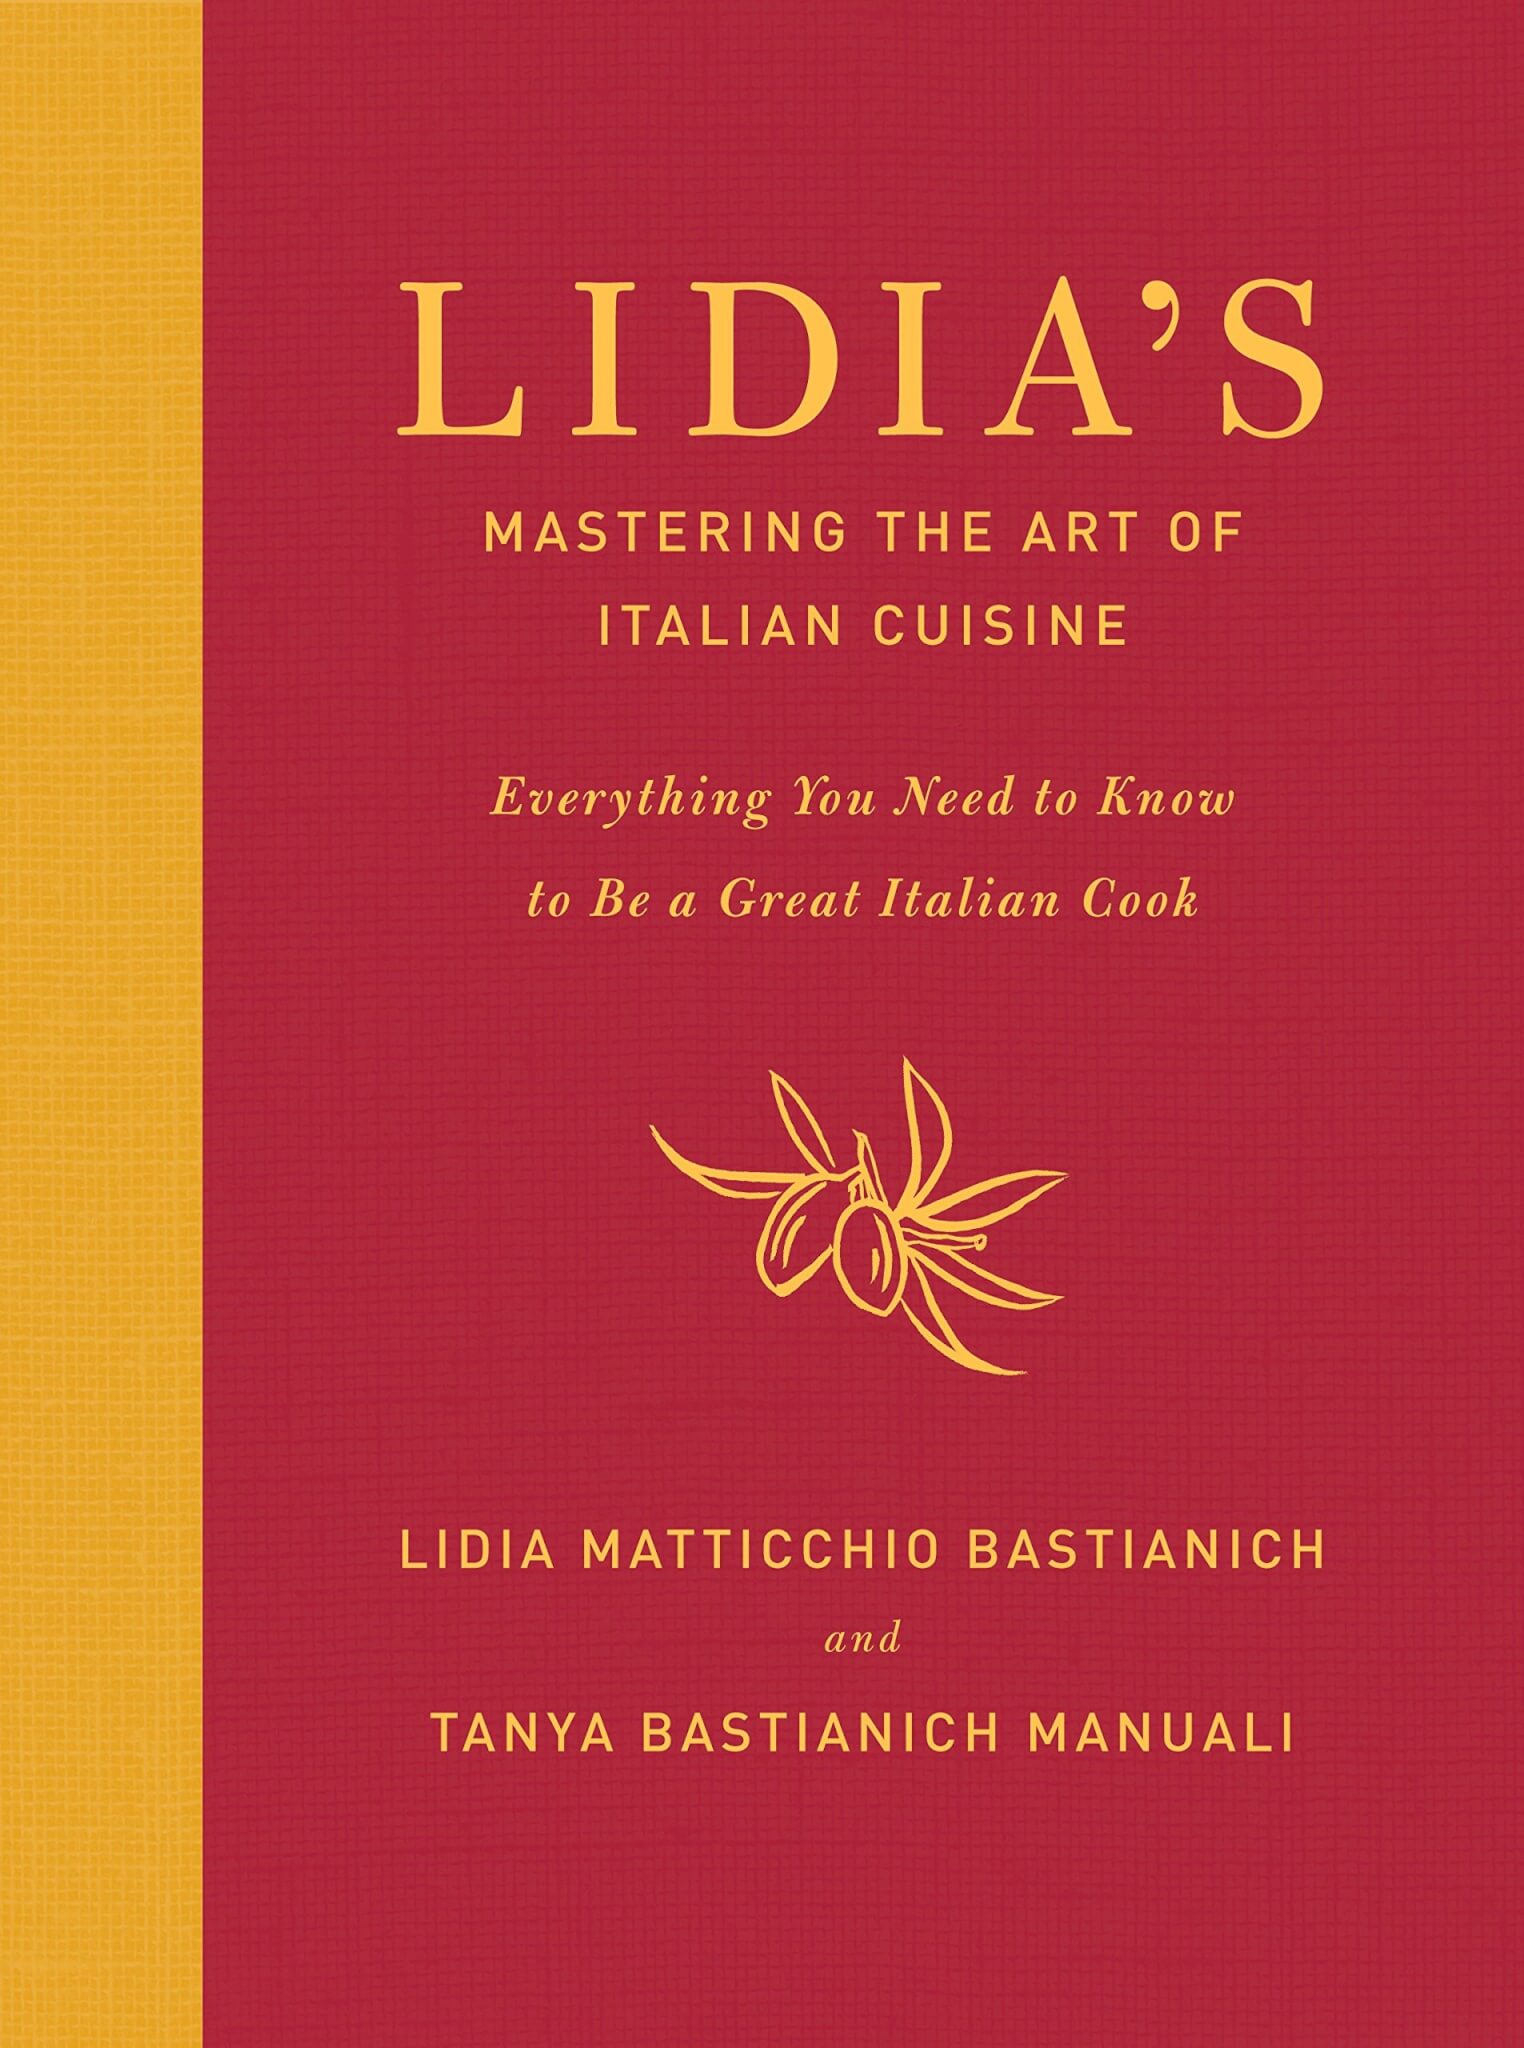 "Lidia’s Mastering the Art of Italian Cuisine" by Lidia Matticchio Bastianich and Tanya Bastianich Manuali 